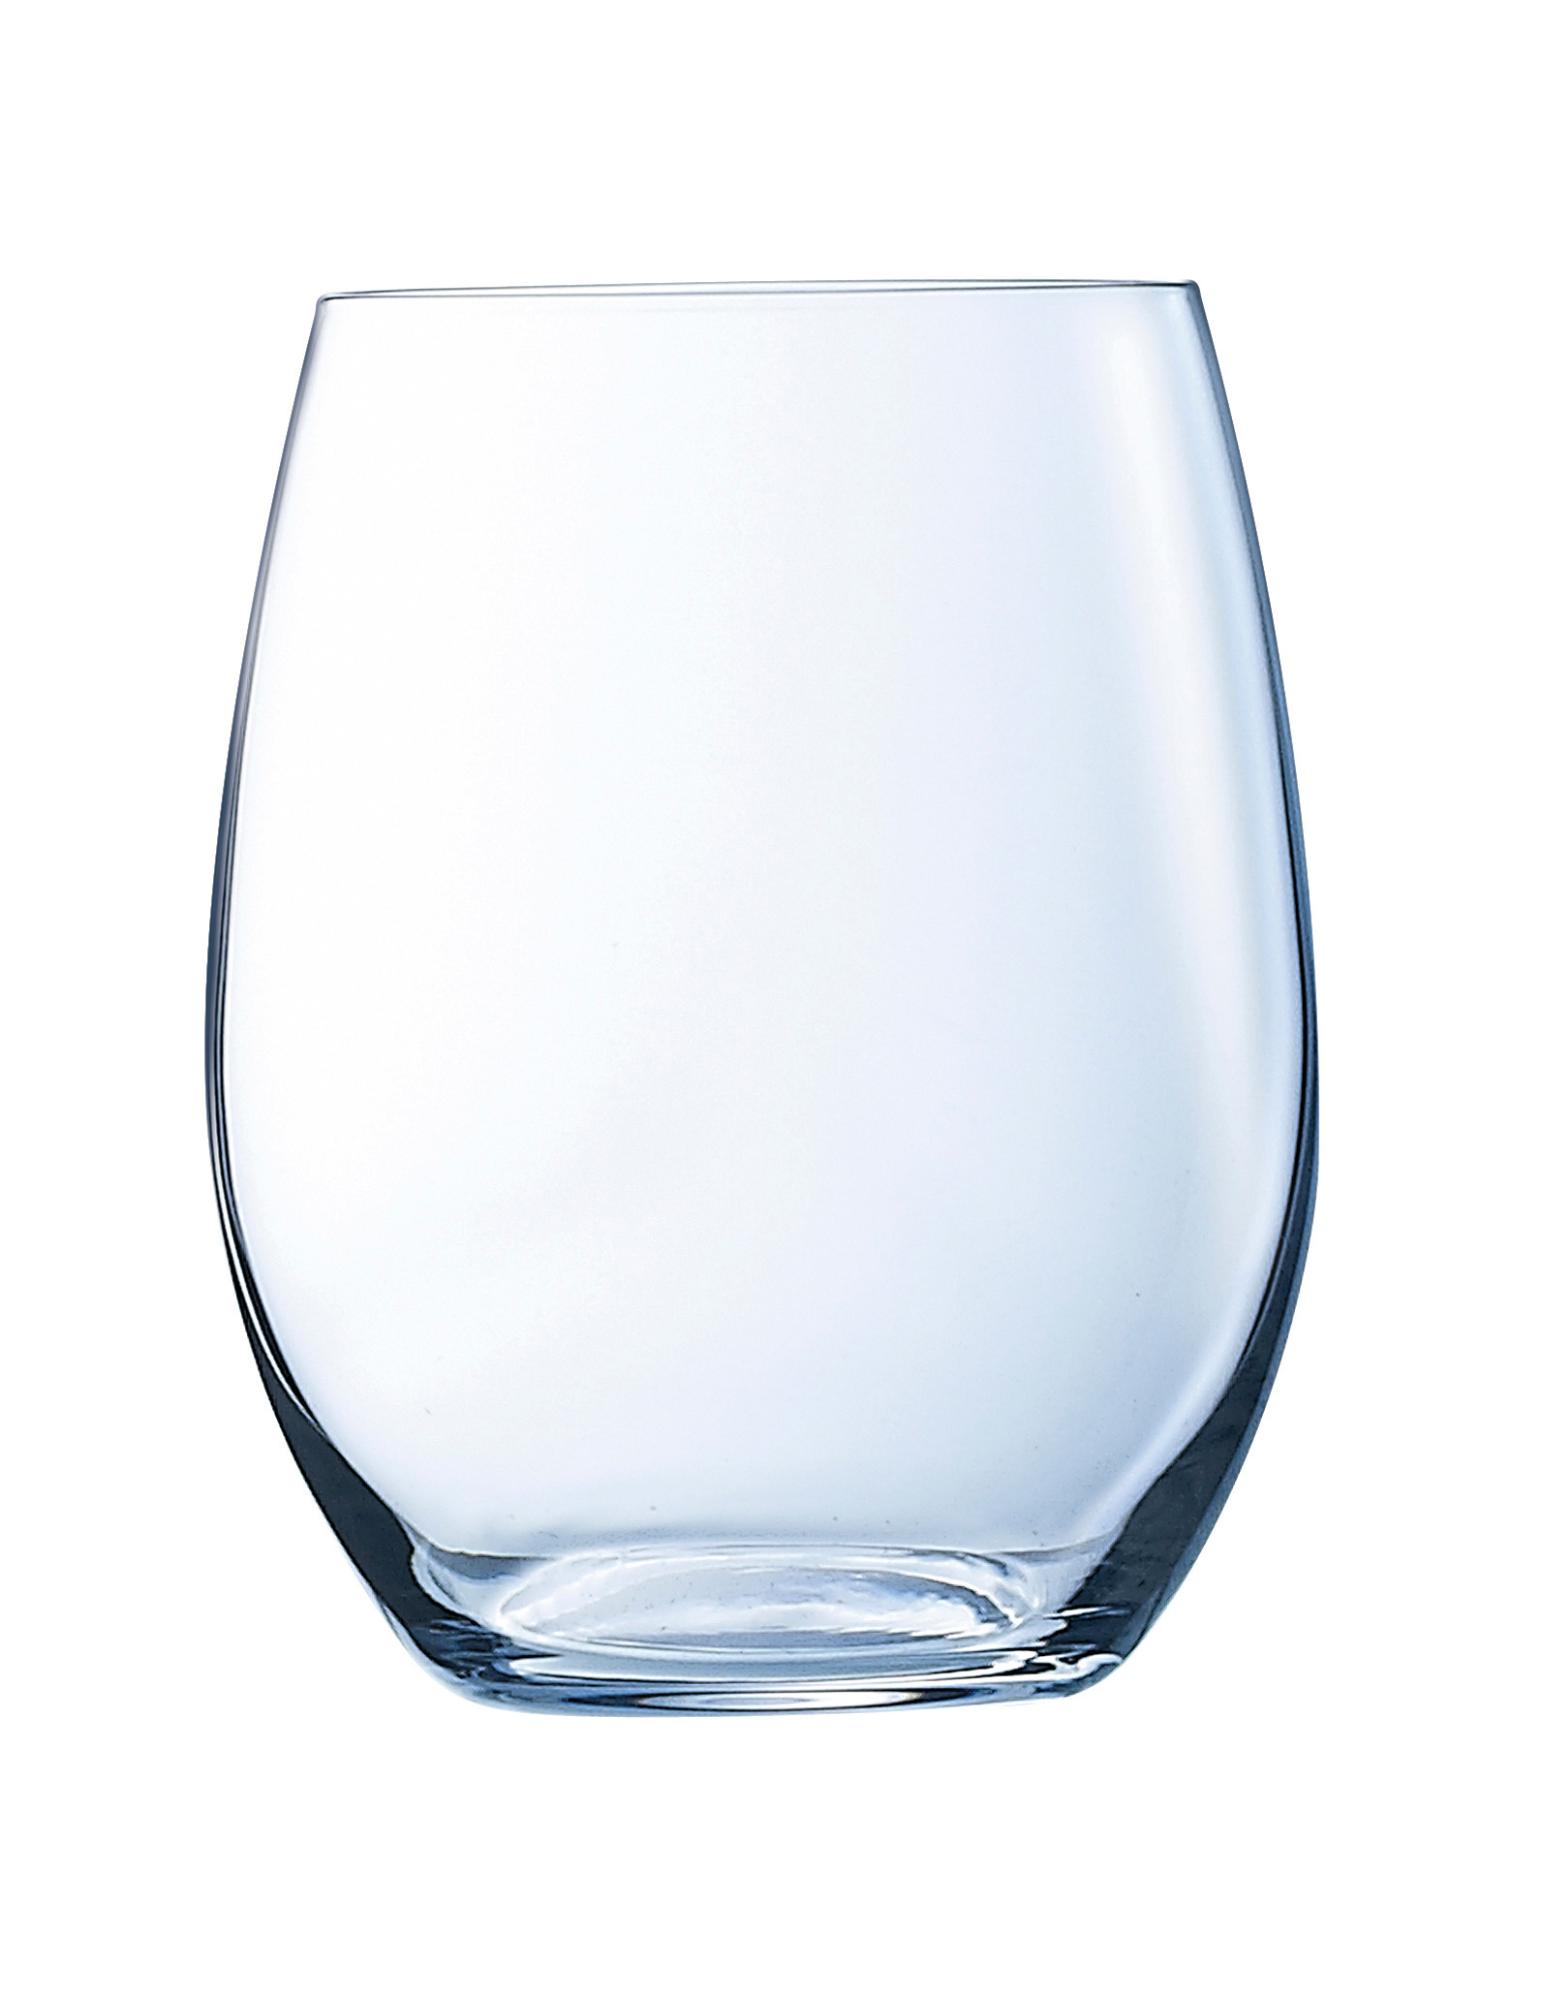 Primary glass, 440ml